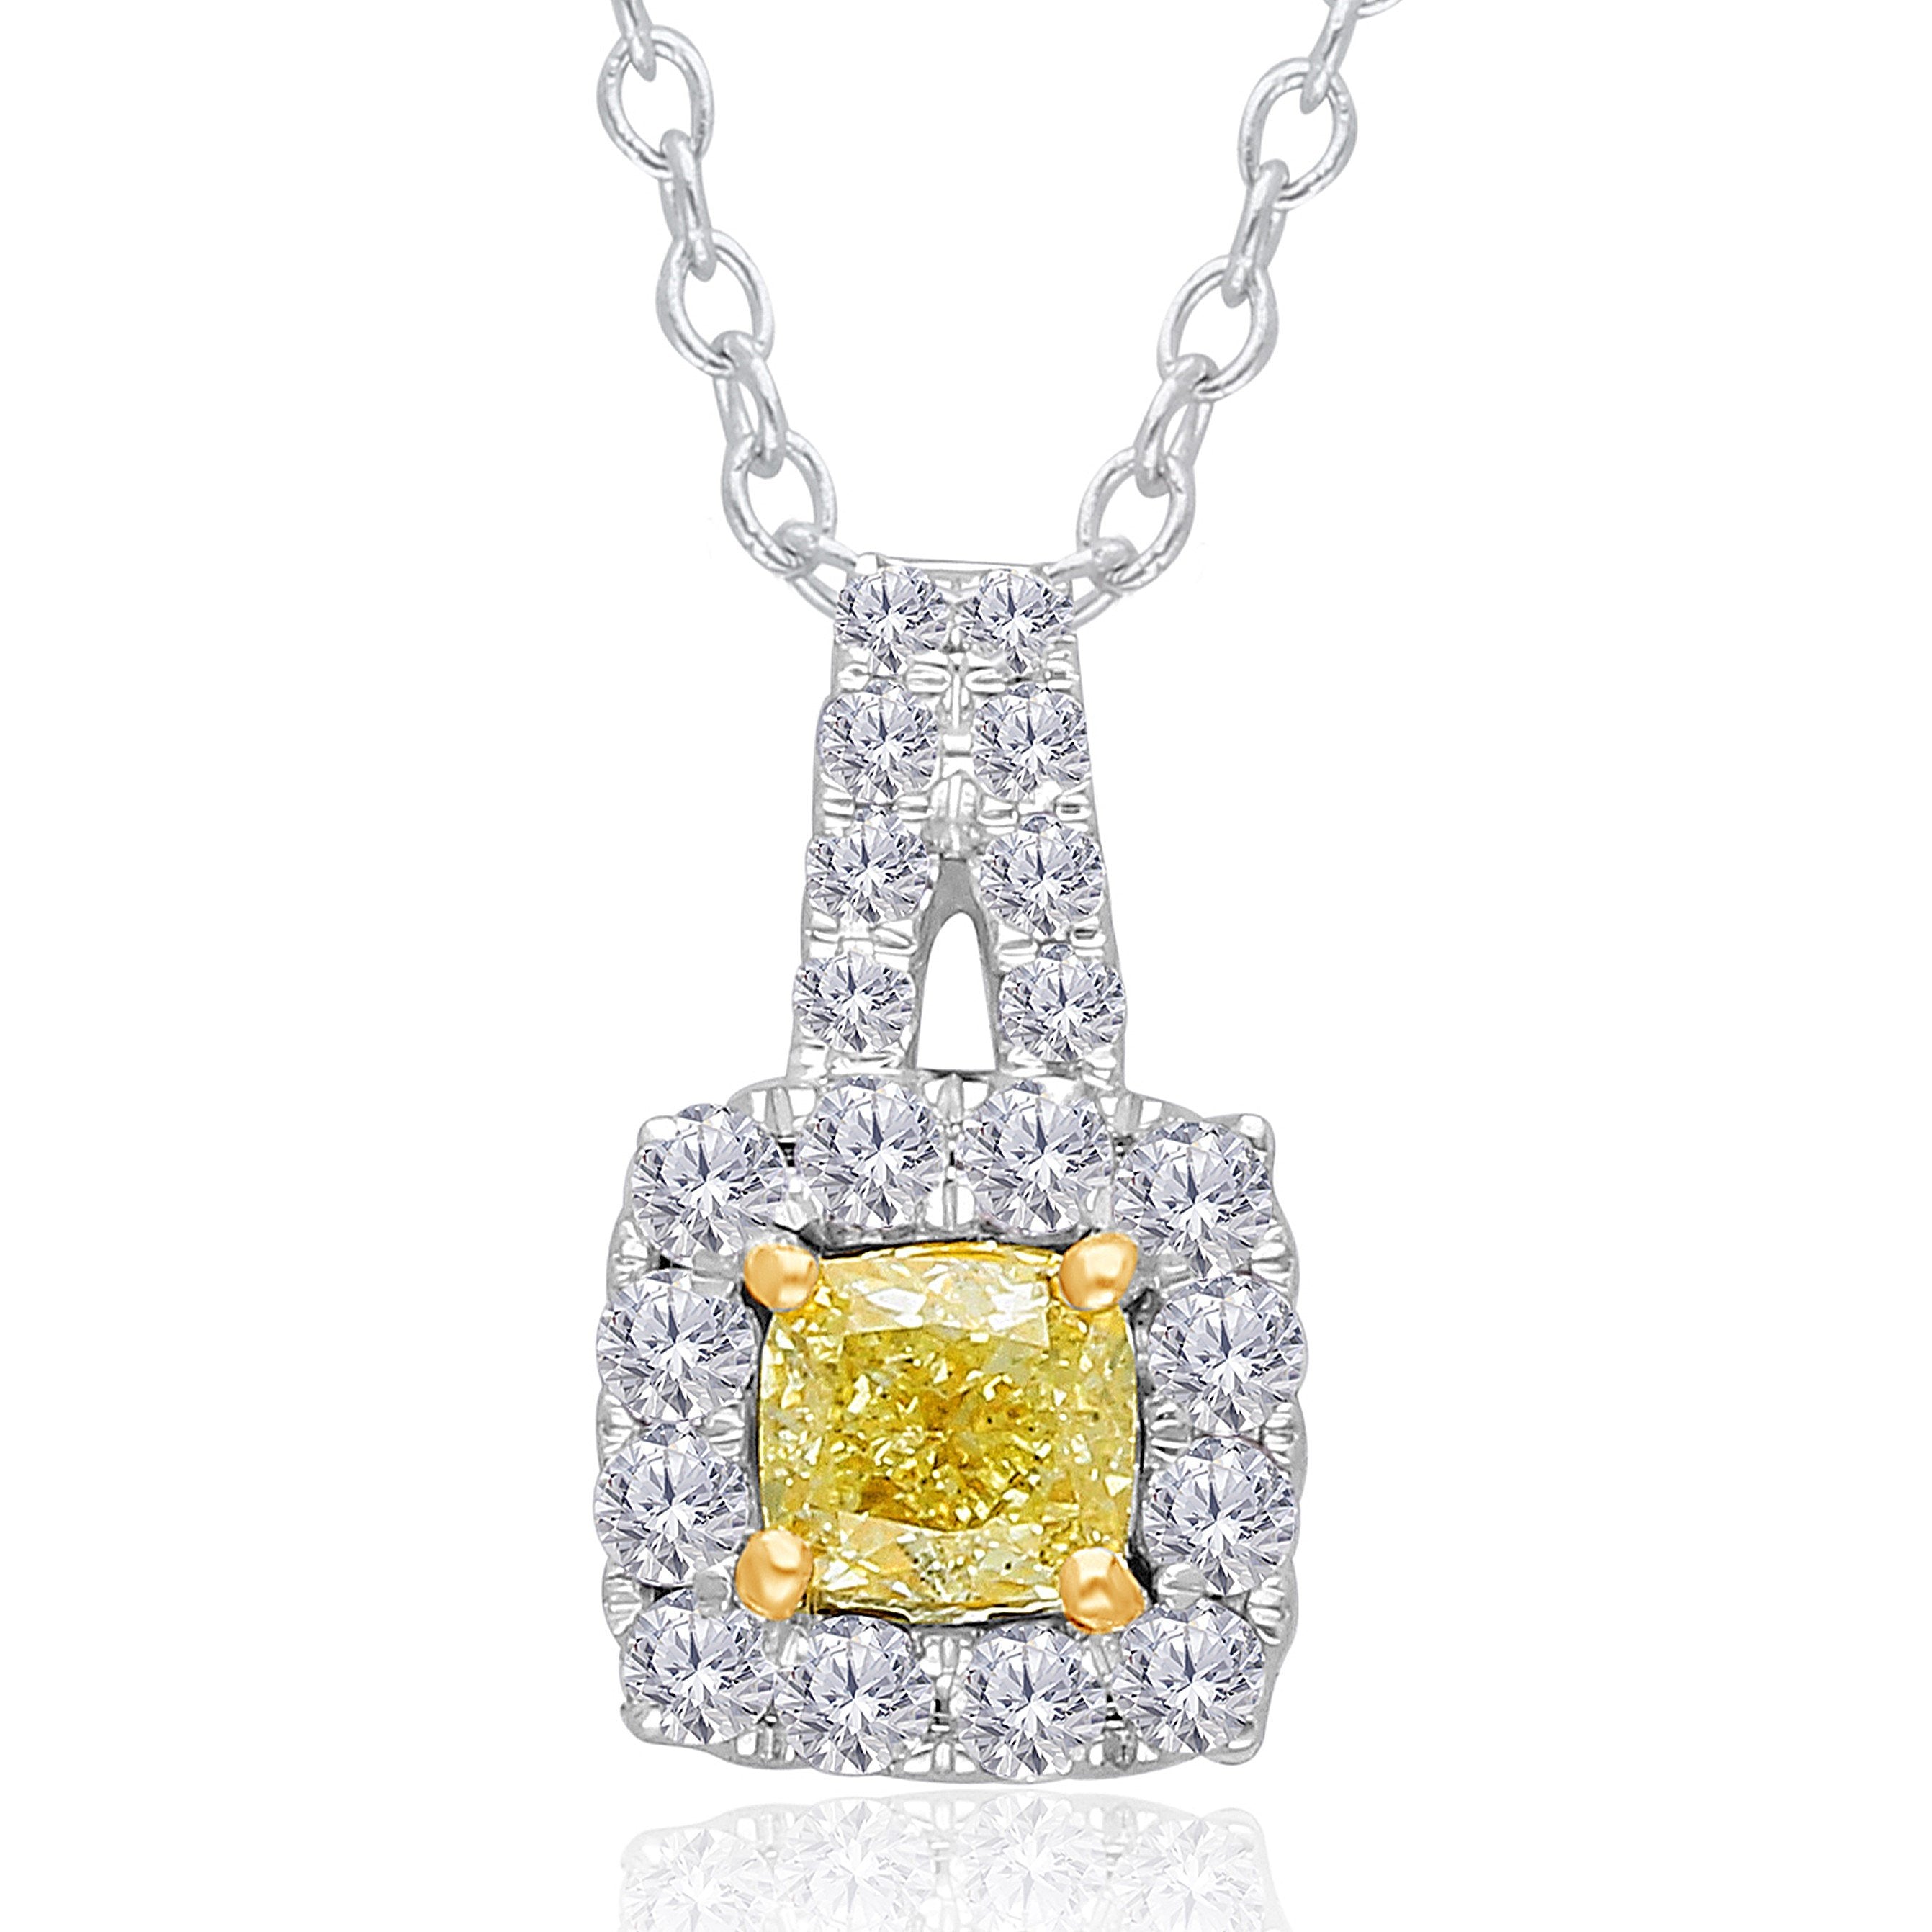 18 karat yellow gold heart pendant with matt & shiny finish - Itai Diamonds